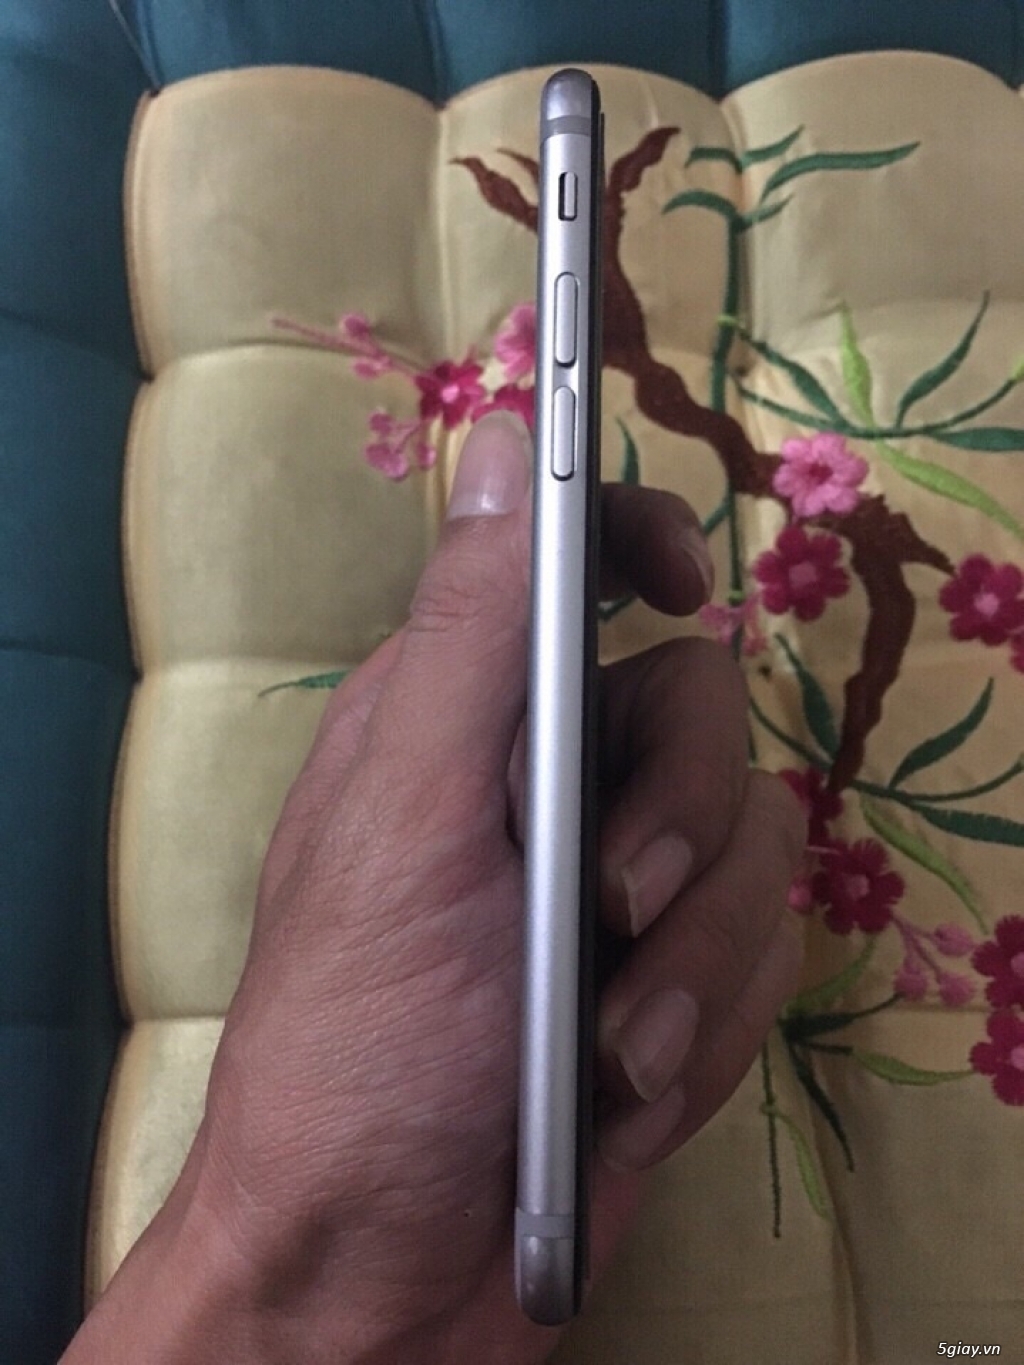 Iphone 6 64gb grey lock at&t - 3